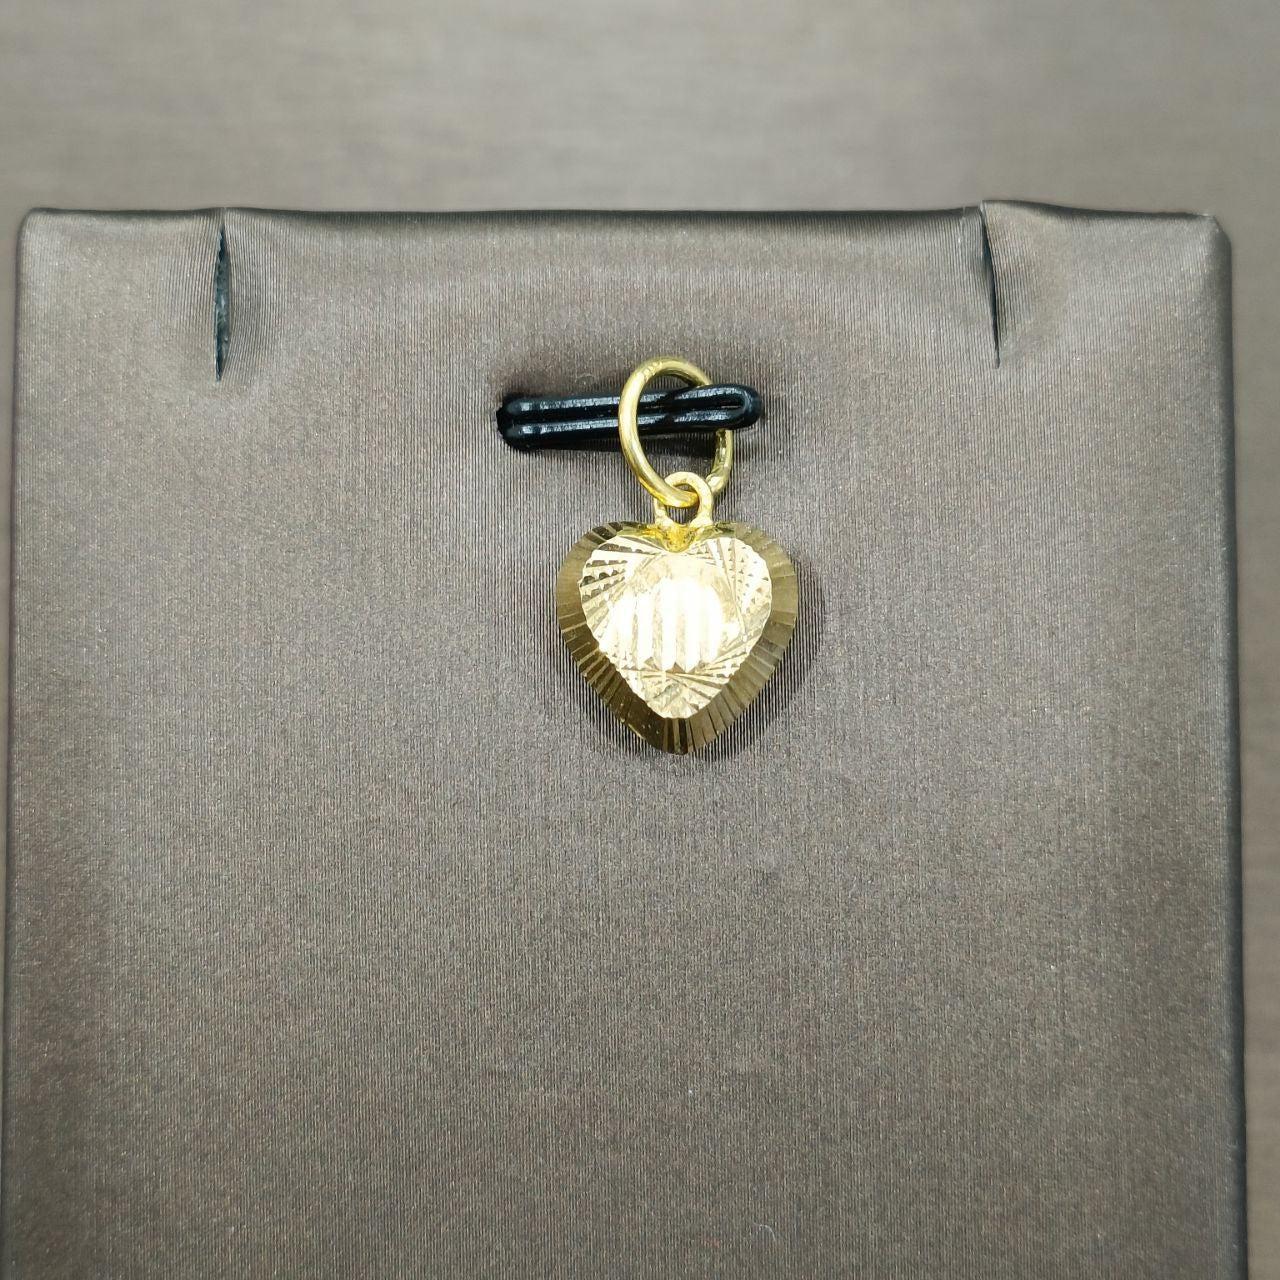 22k / 916 Gold Heart Cutting Pendant V5-916 gold-Best Gold Shop